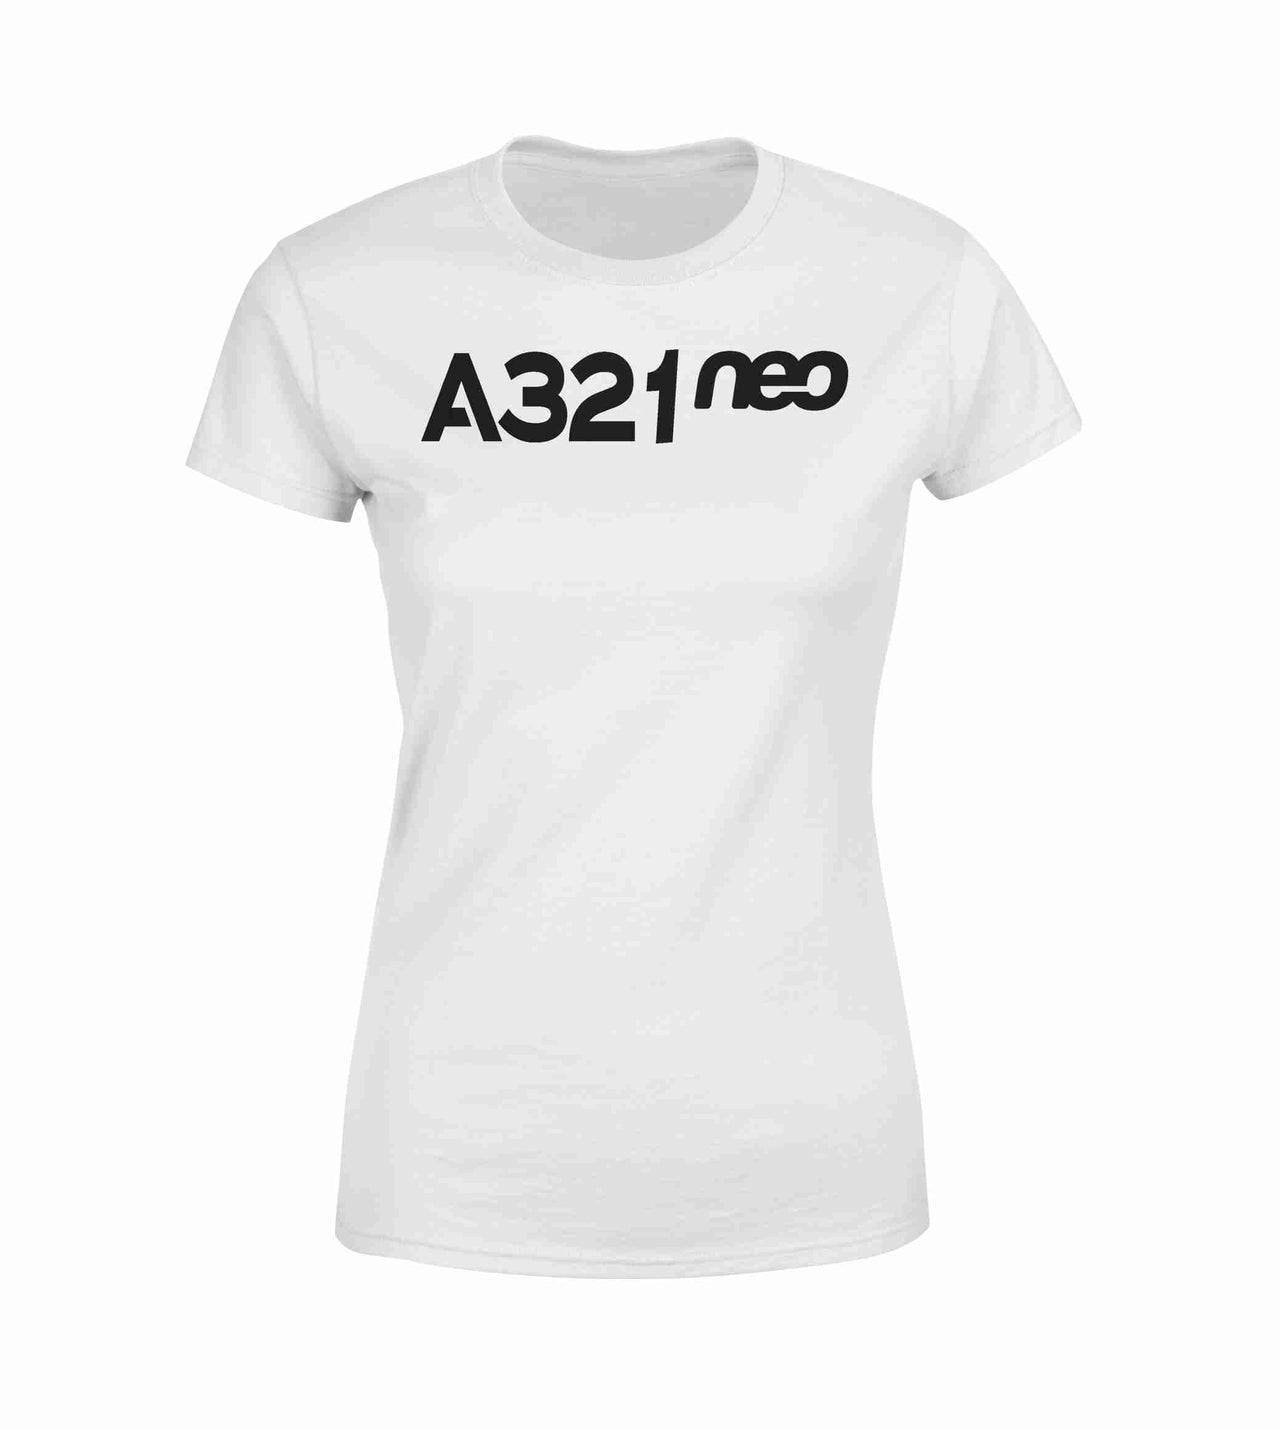 A321neo & Text Designed Women T-Shirts